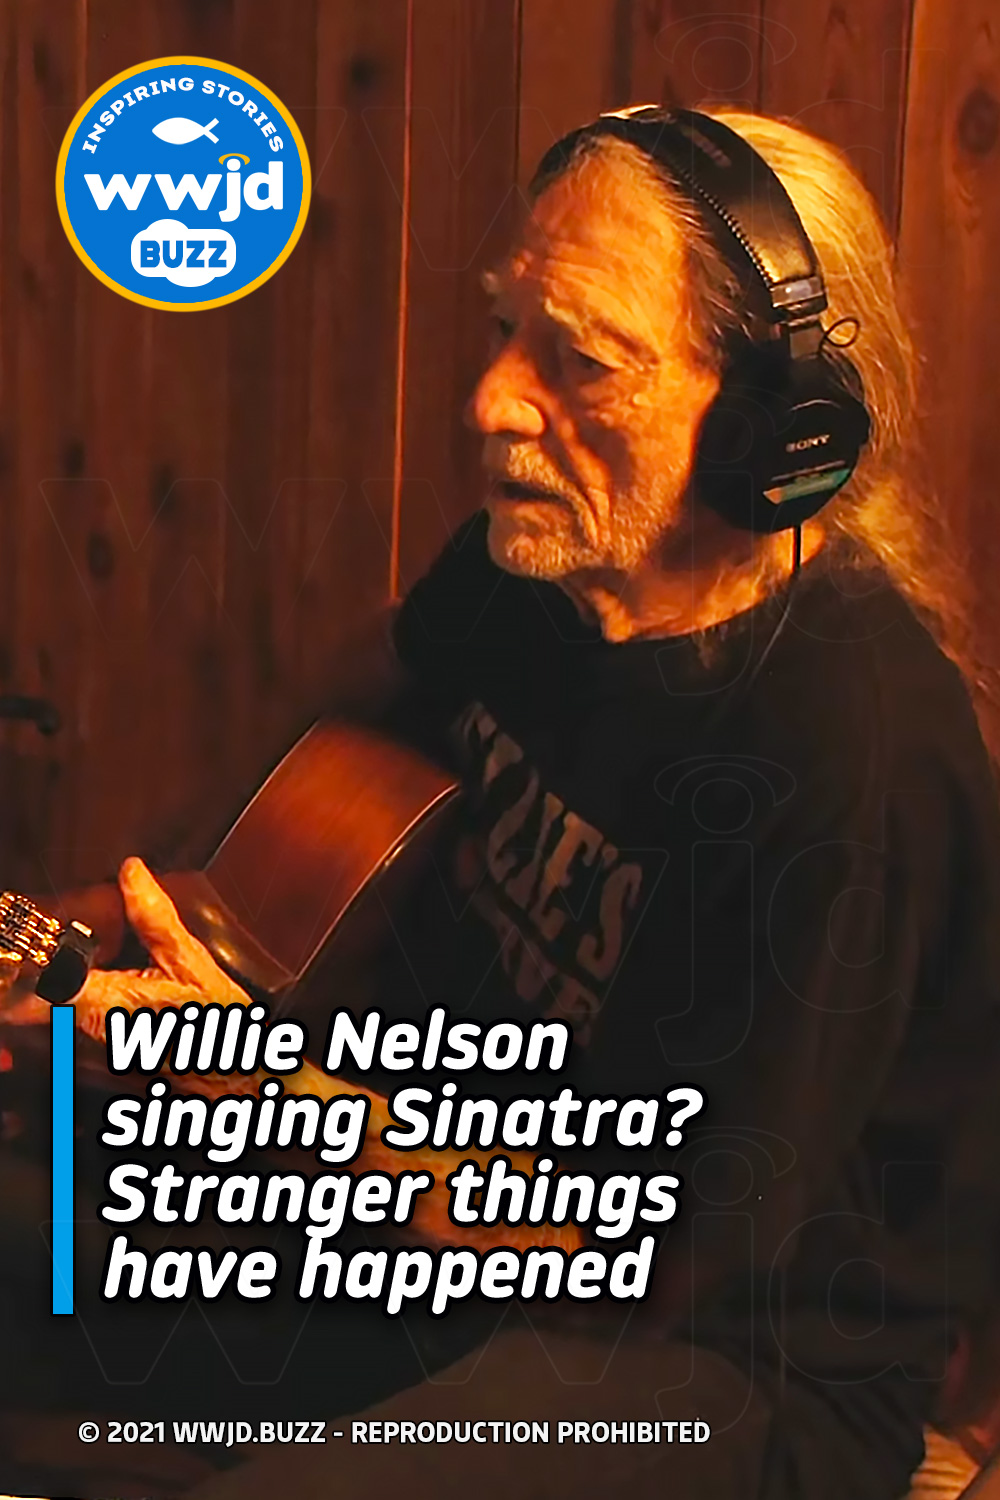 Willie Nelson singing Sinatra? Stranger things have happened